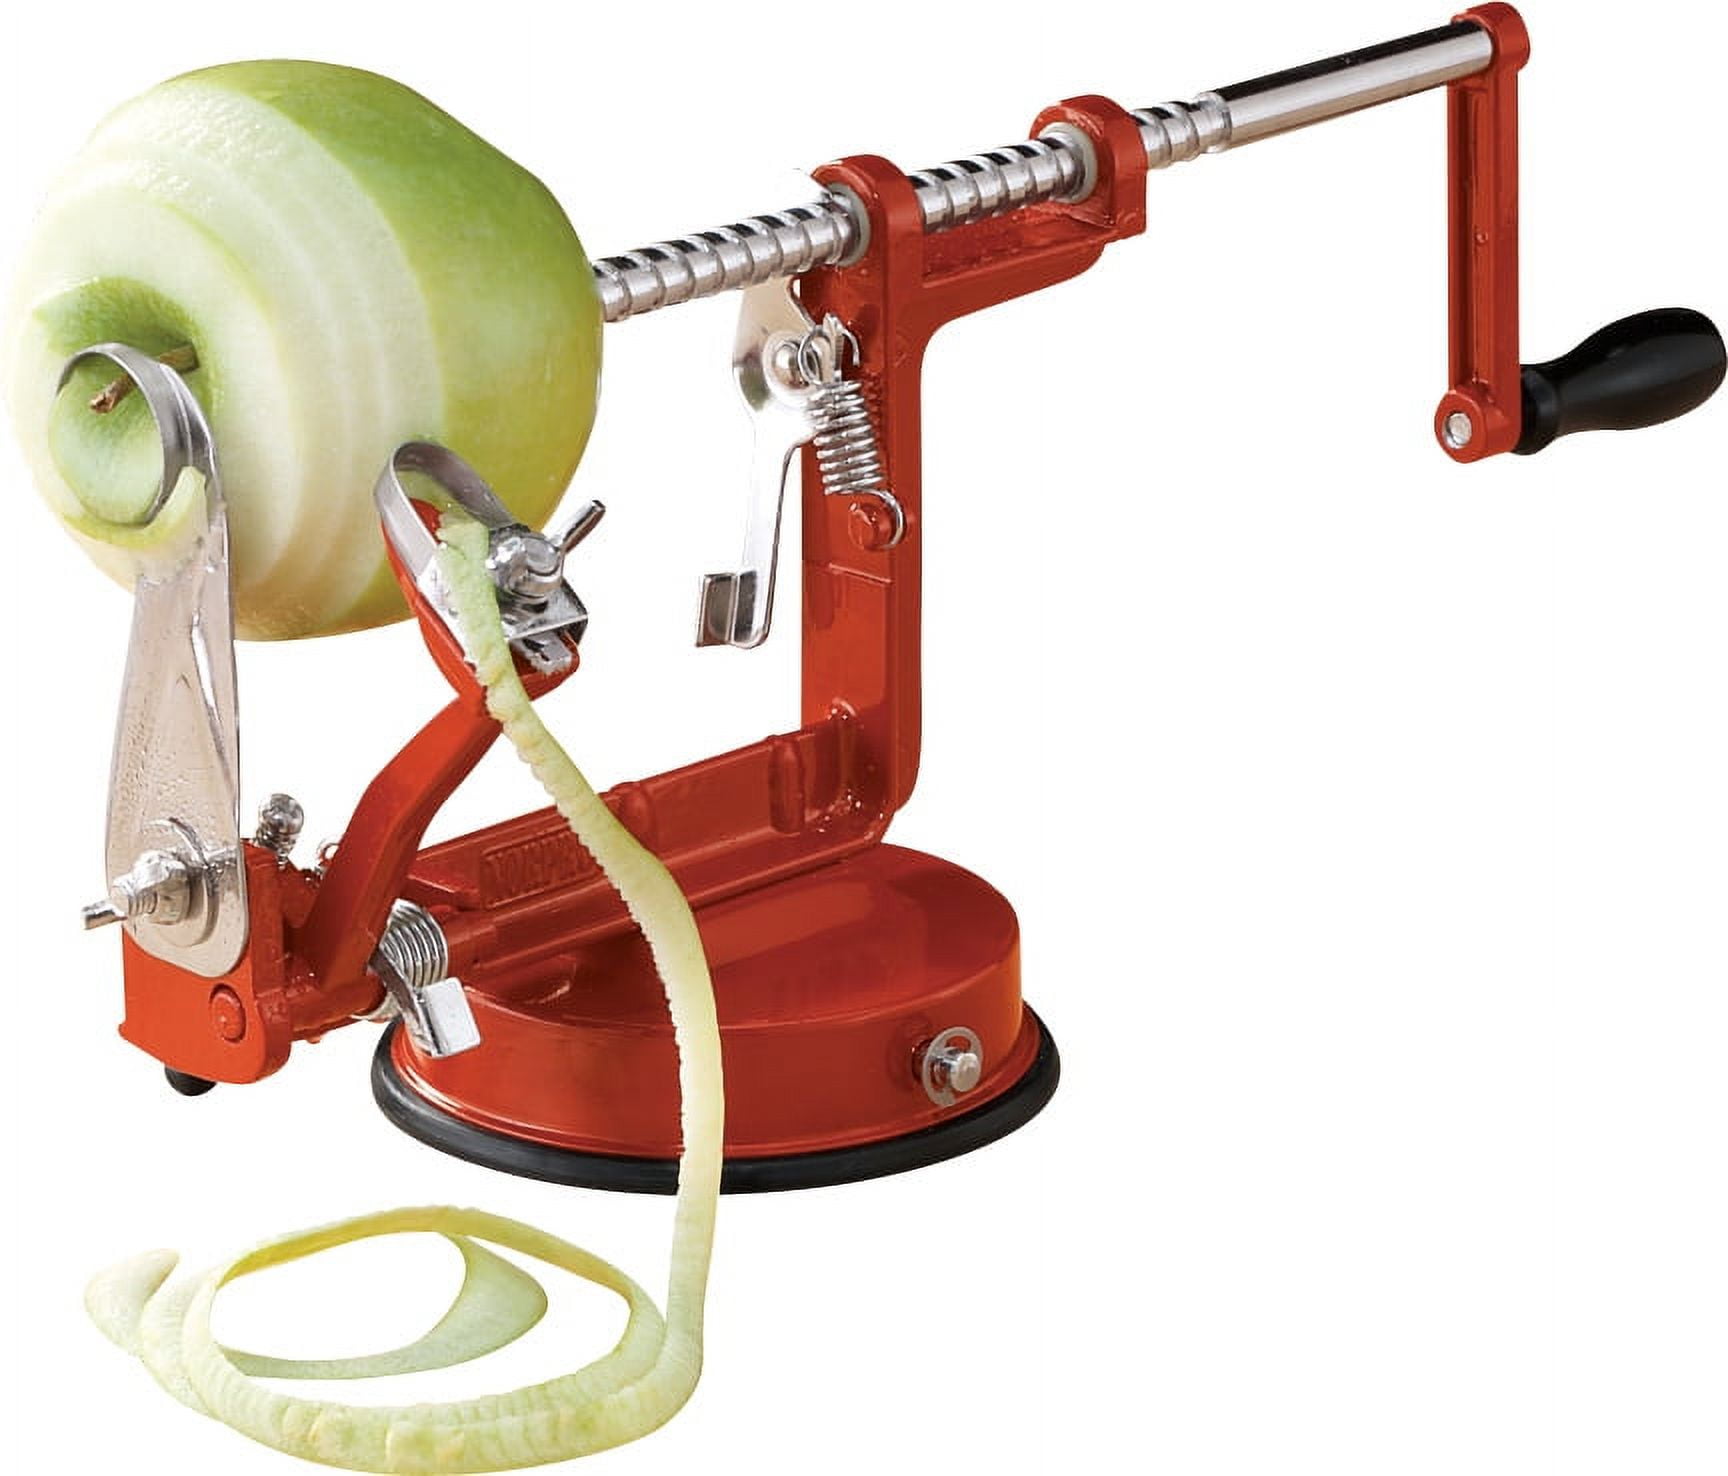 Apple Peeler Corer Slicer. Яблокочистка "Apple Peeler". KP-031 яблокочистка Apple-Peeler-Corer-Slicer. Яблокорезка, Apple Peeler, машинка для чистки и нарезки яблок!.